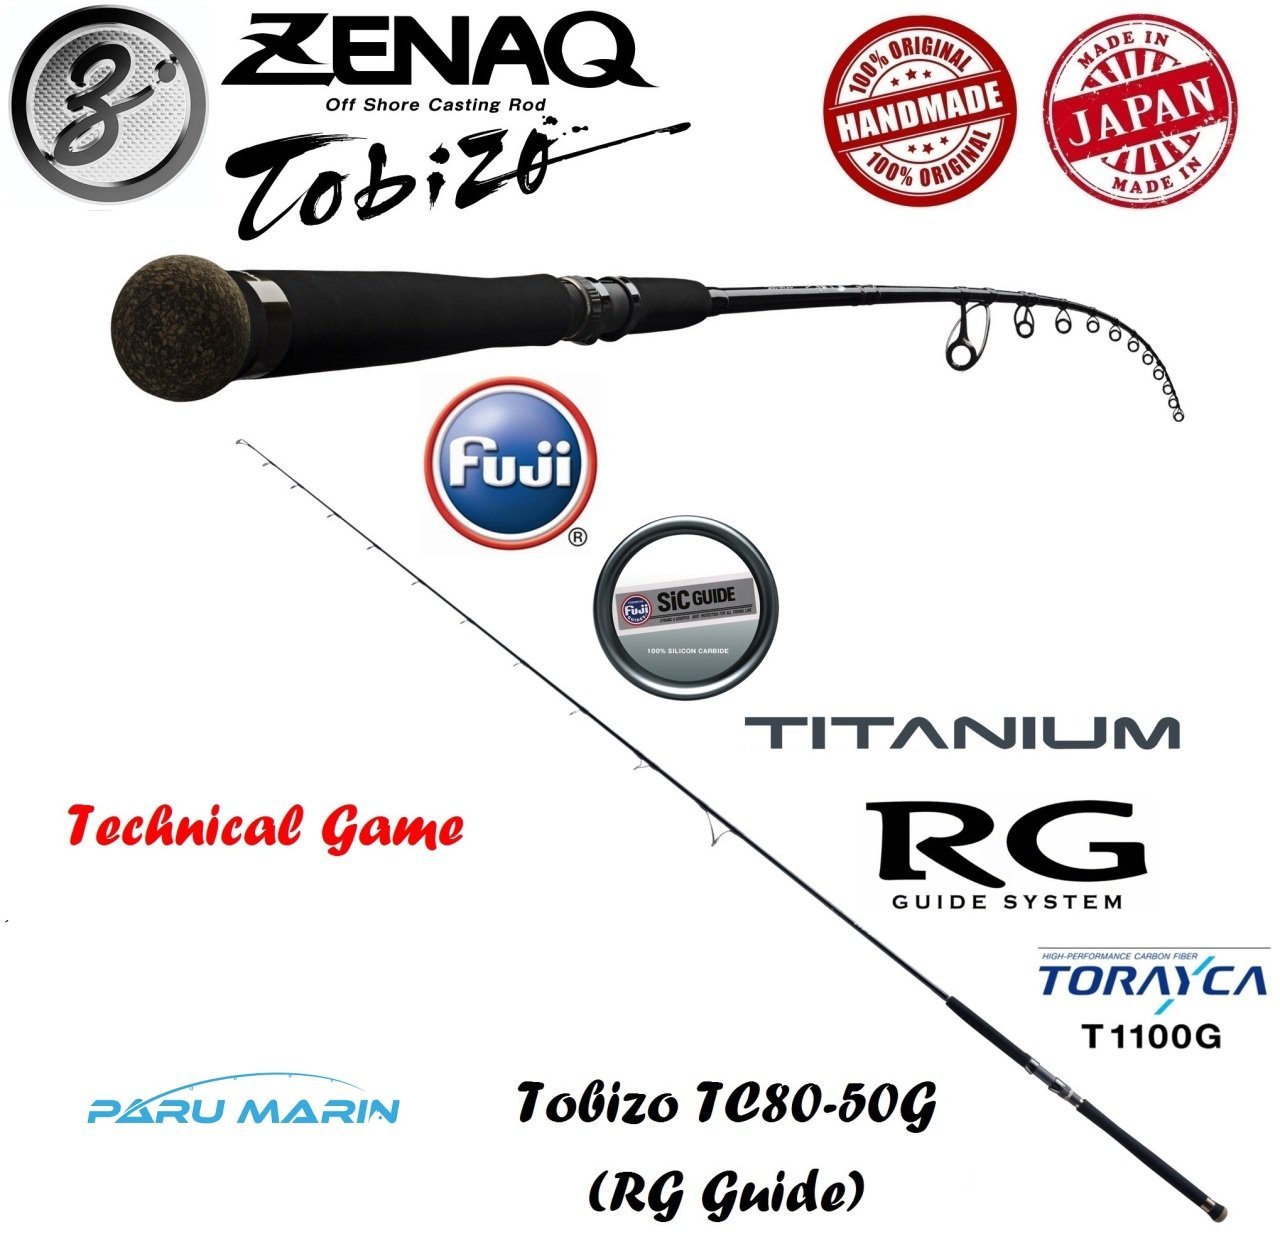 Zenaq Tobizo  TC80-50G for Technical Game Off Shore Casting Kamış  244 cm. Max. 80 g.